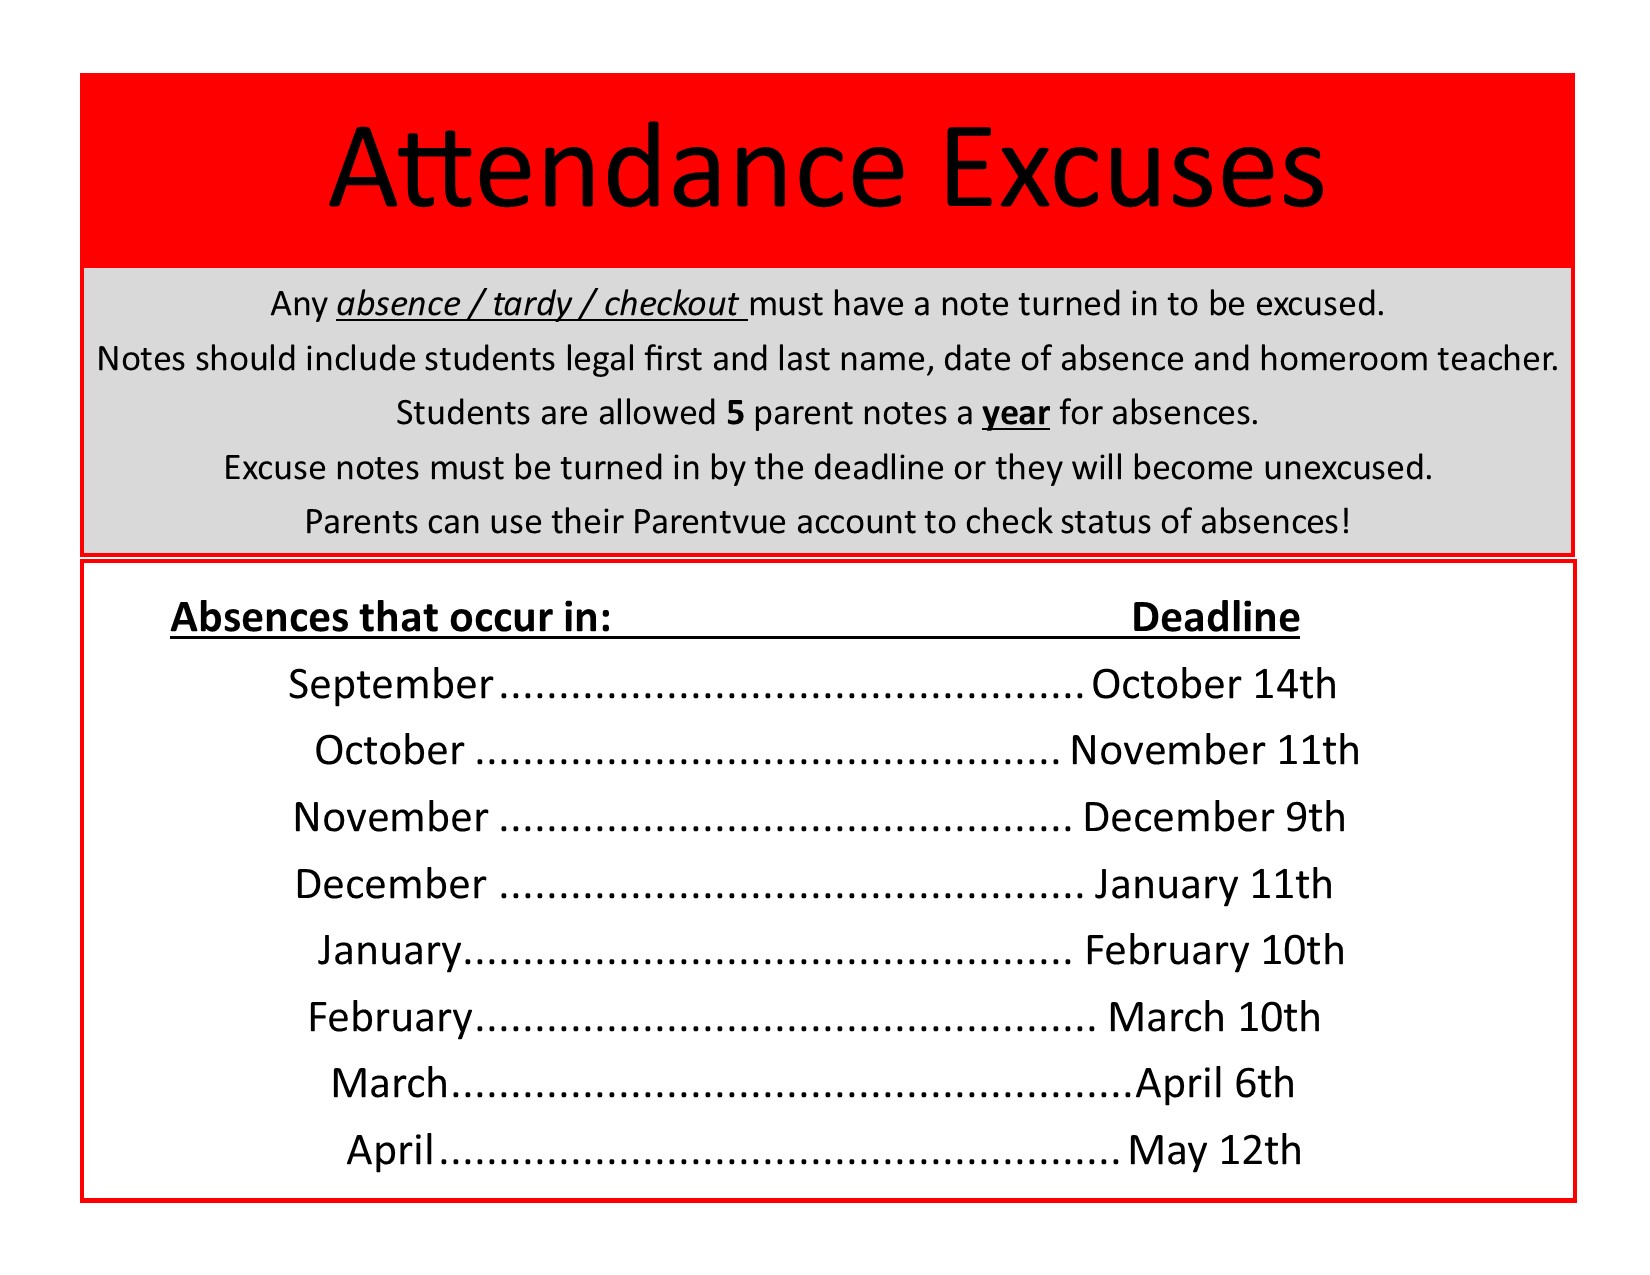 Attendance Deadlines